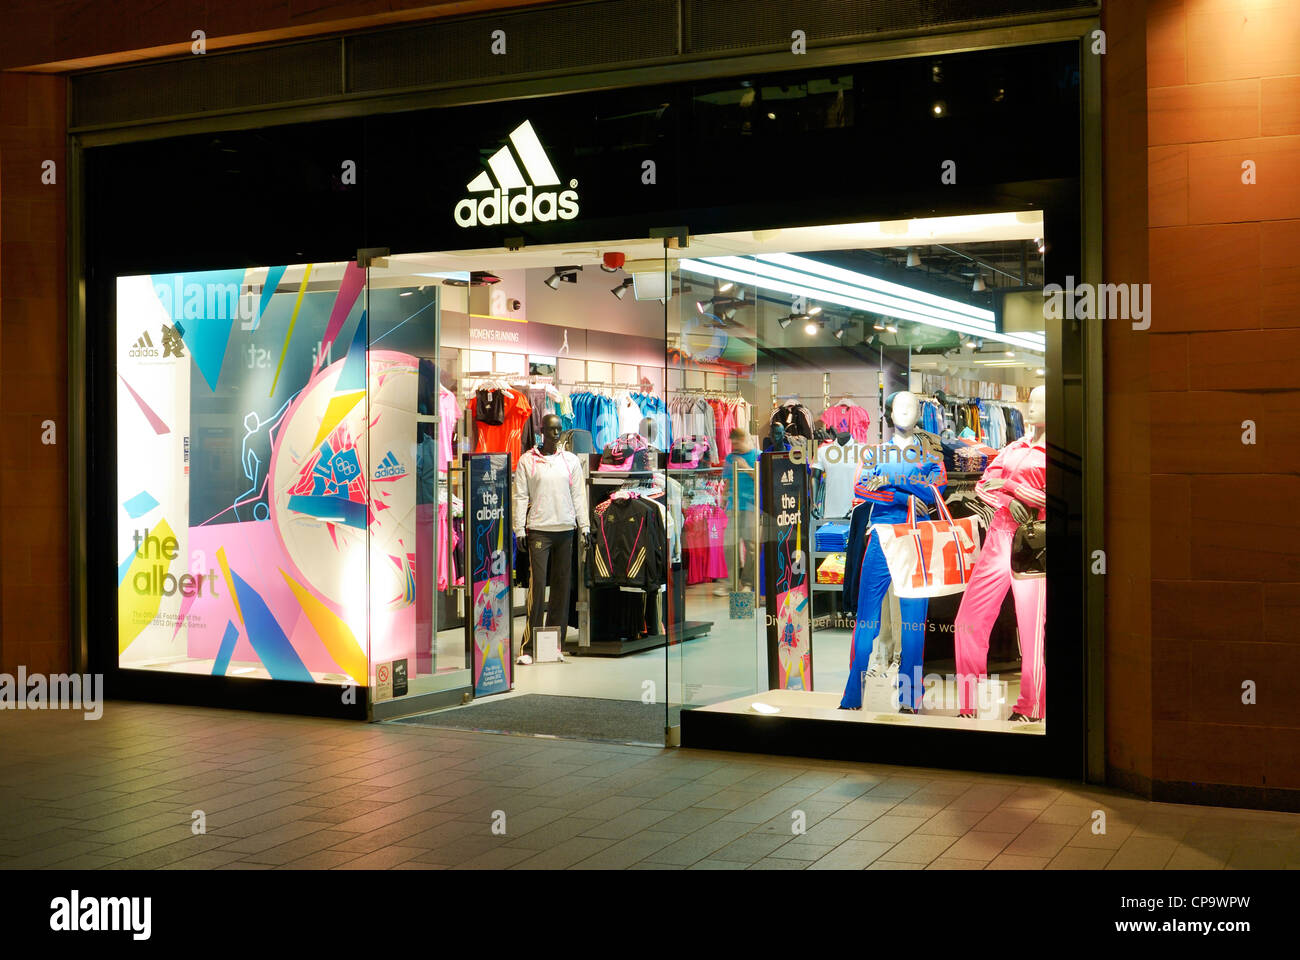 Adidas Shop Immagini e Fotos Stock - Alamy